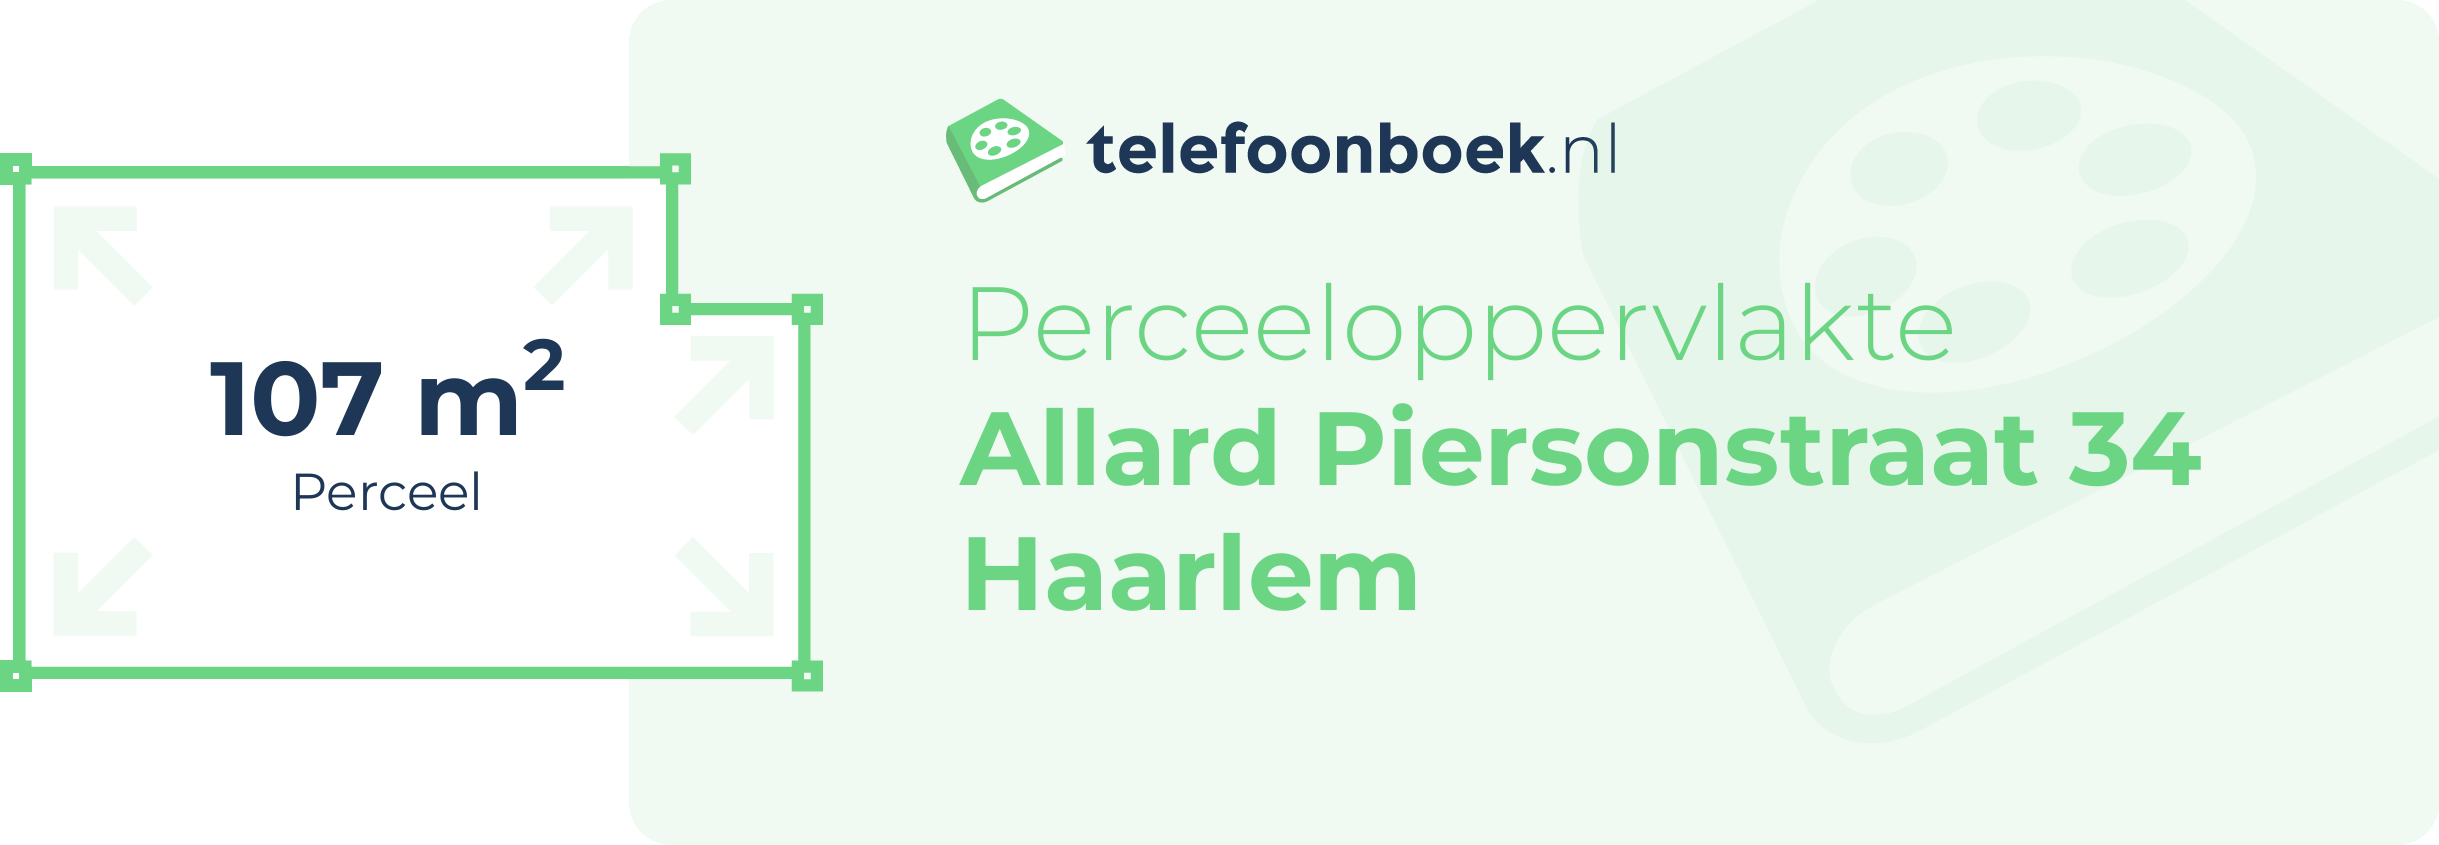 Perceeloppervlakte Allard Piersonstraat 34 Haarlem